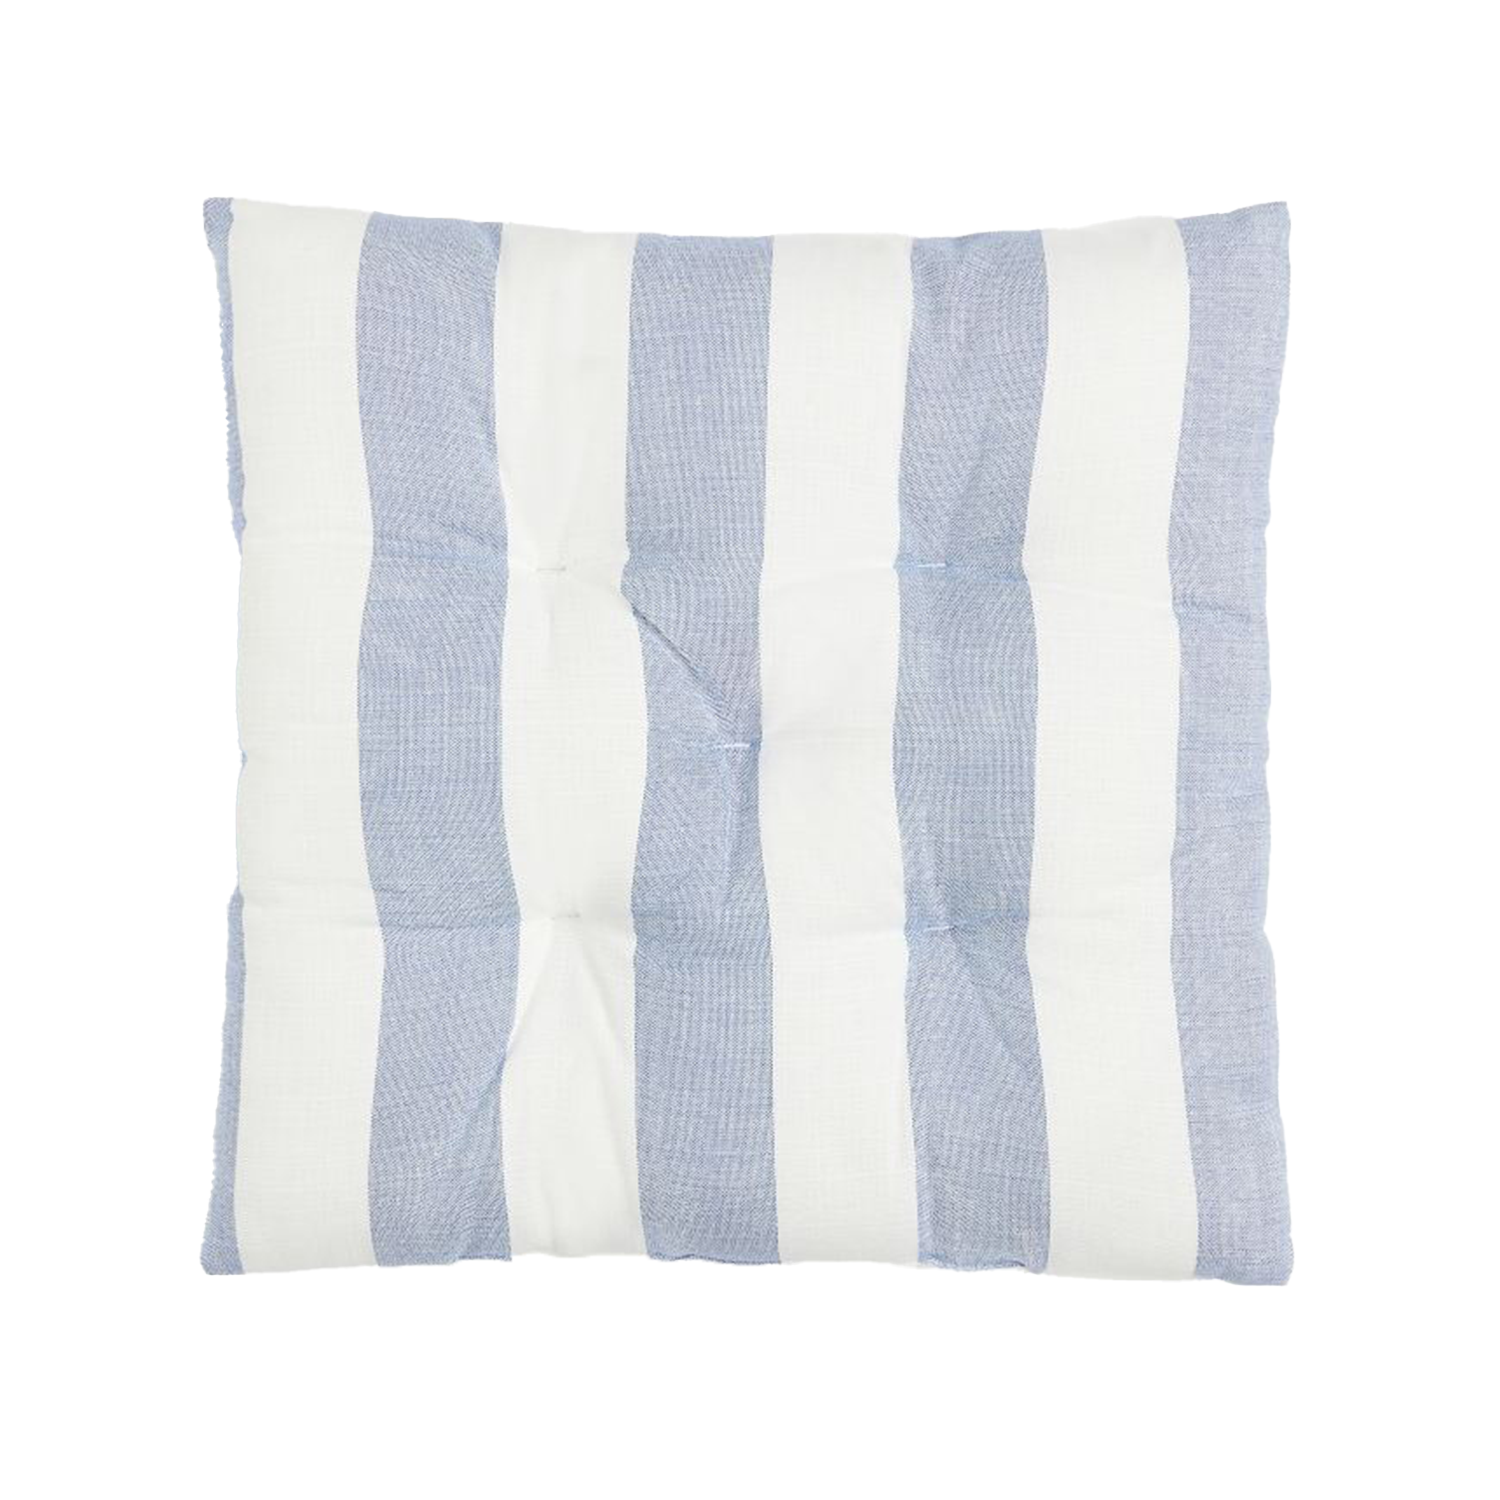 hm home striped cotton seat cushion